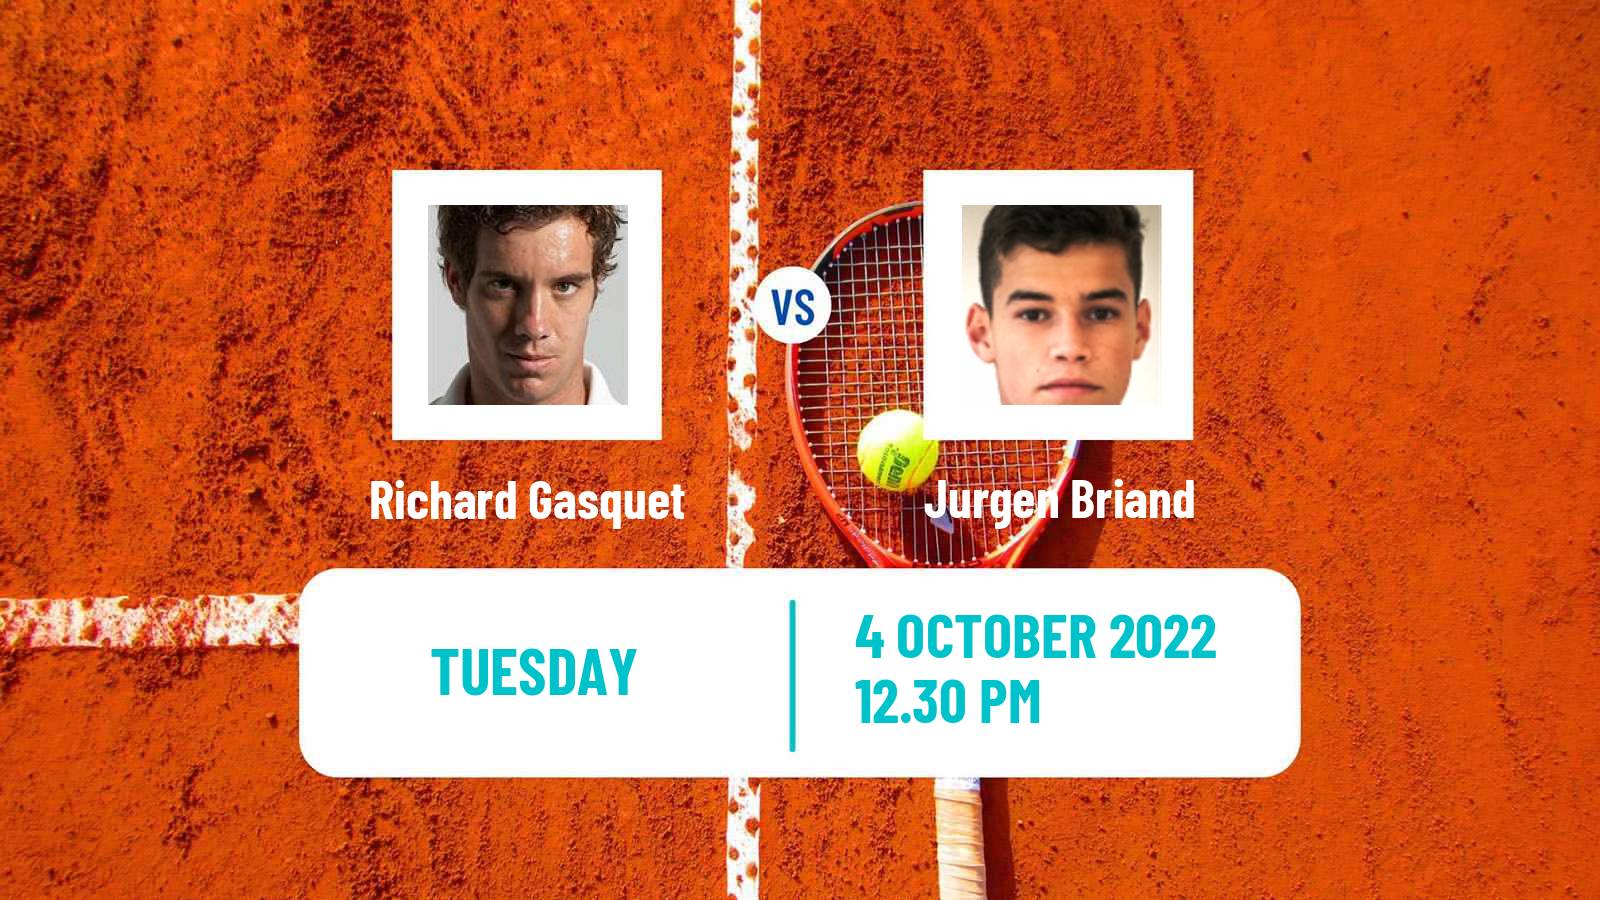 Tennis ATP Challenger Richard Gasquet - Jurgen Briand